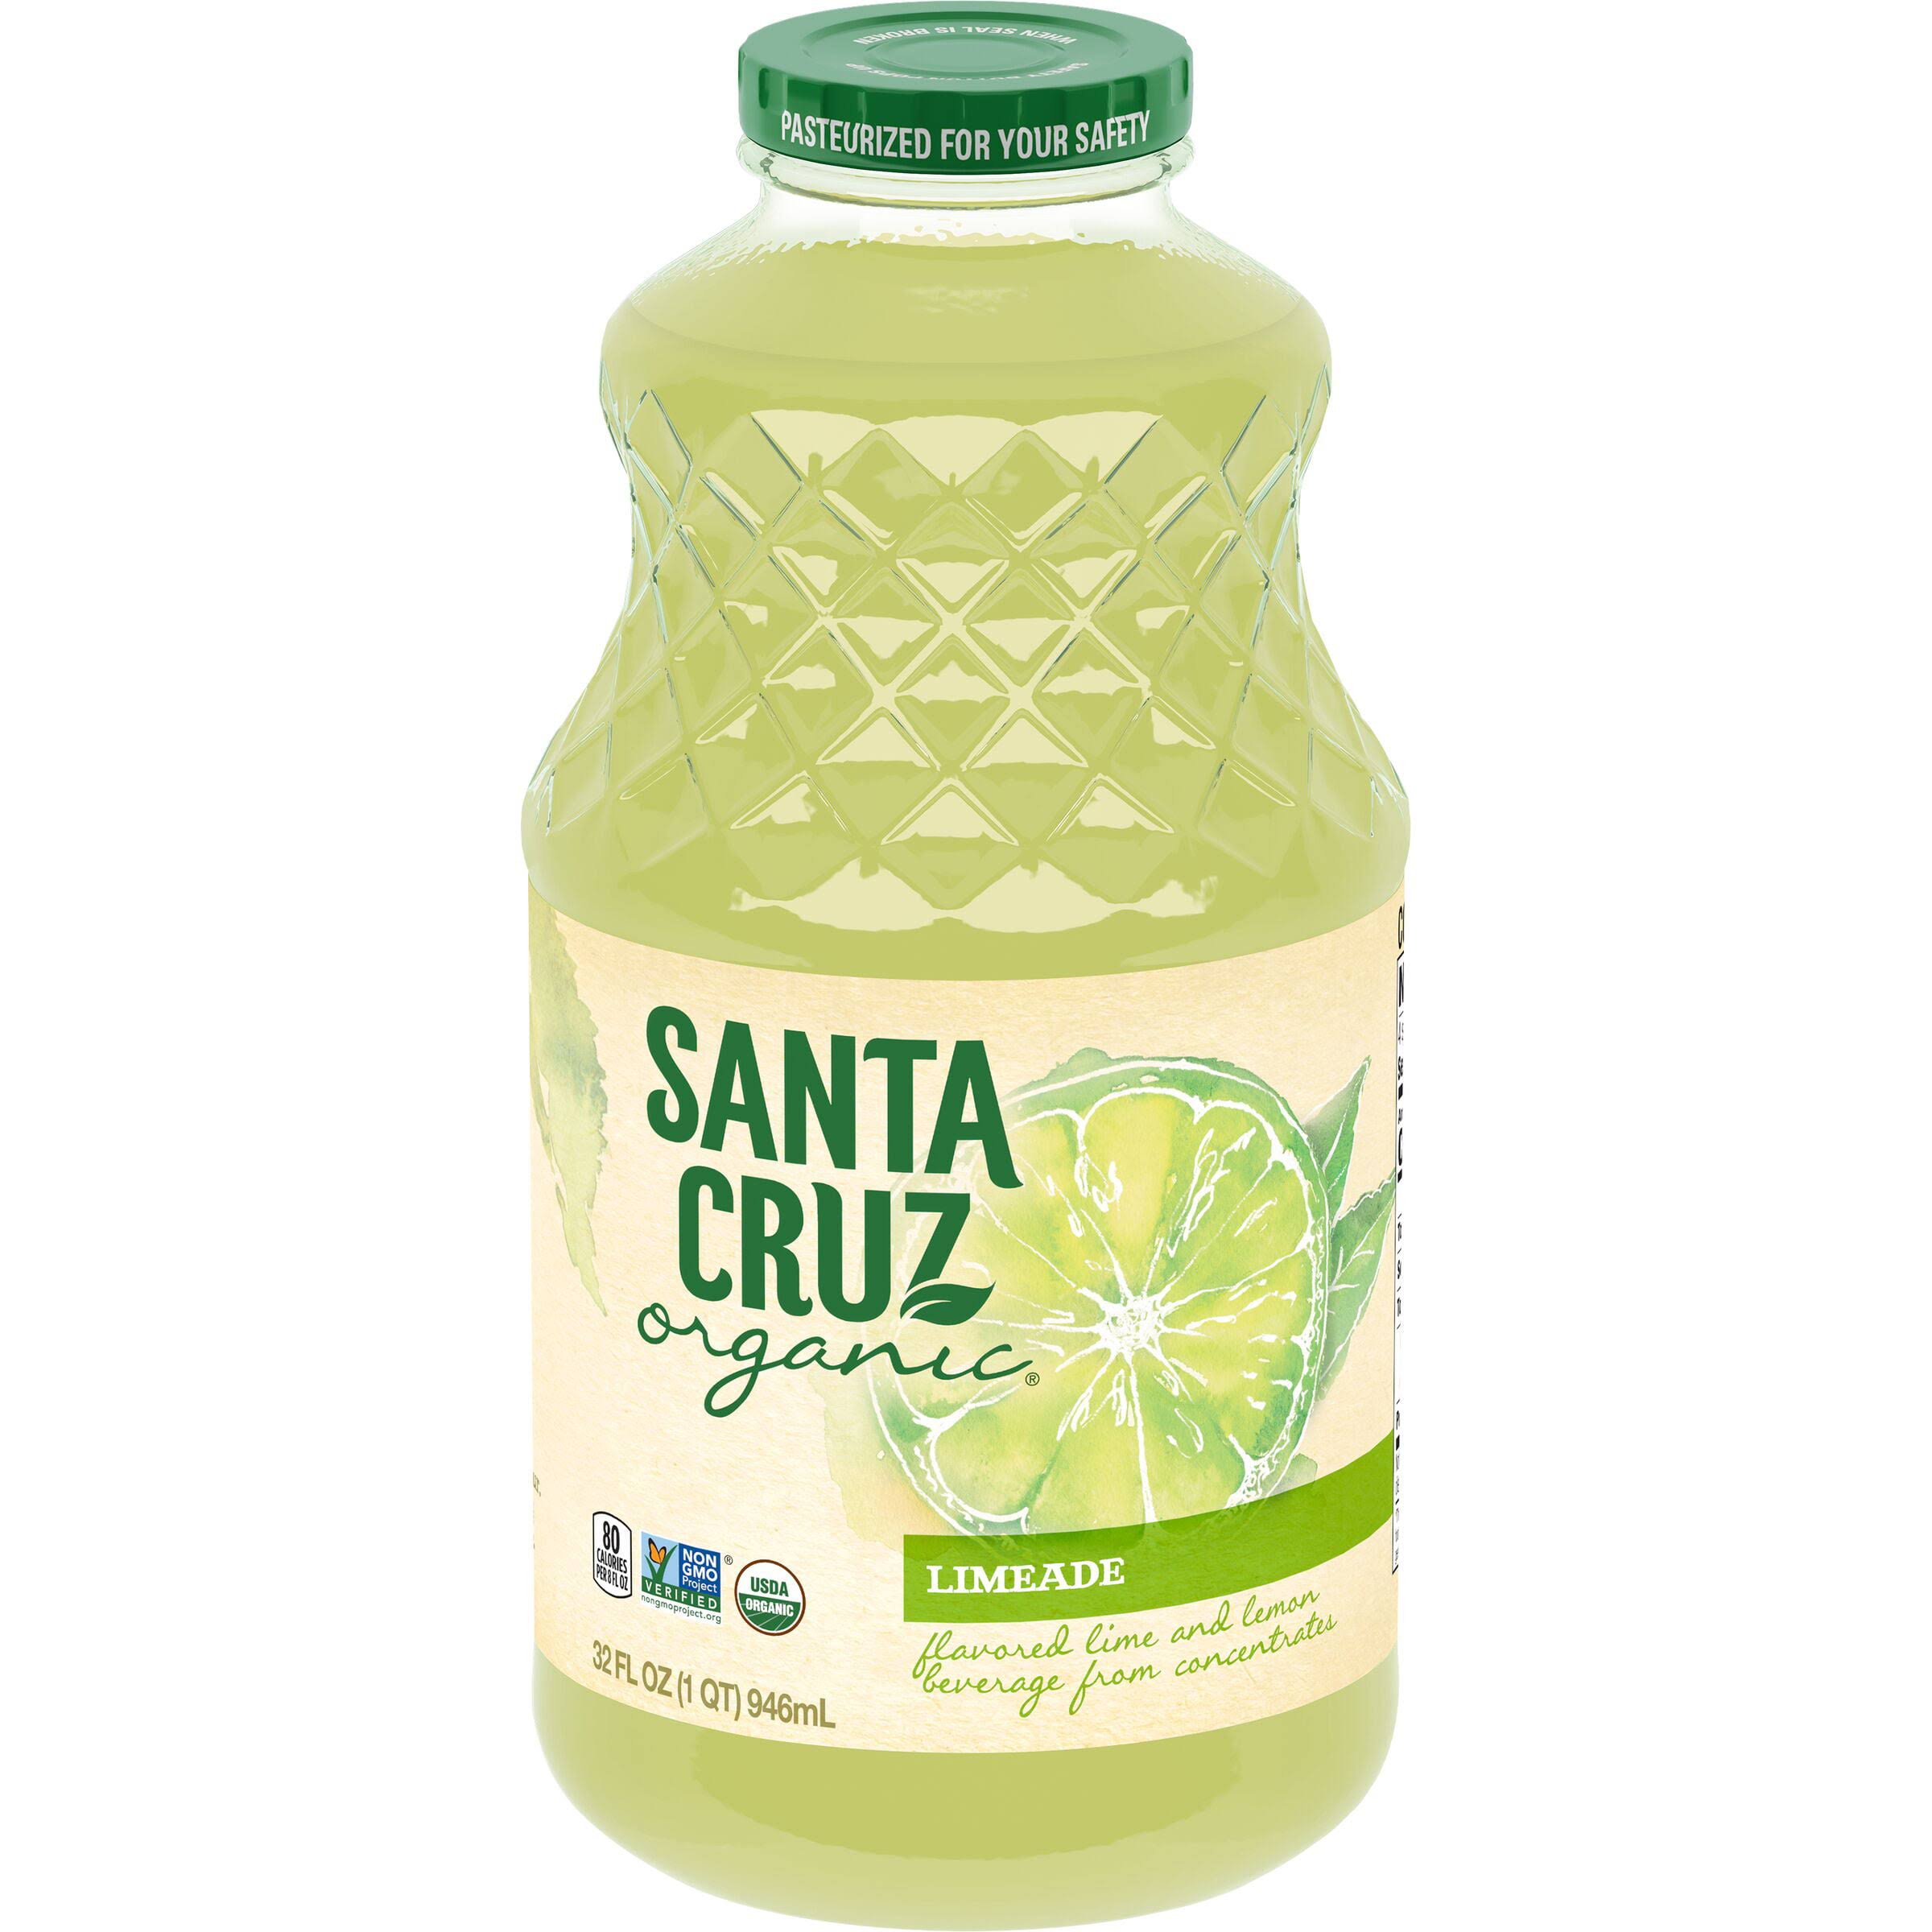 Santa Cruz Organic Juice - Limeade, 32oz